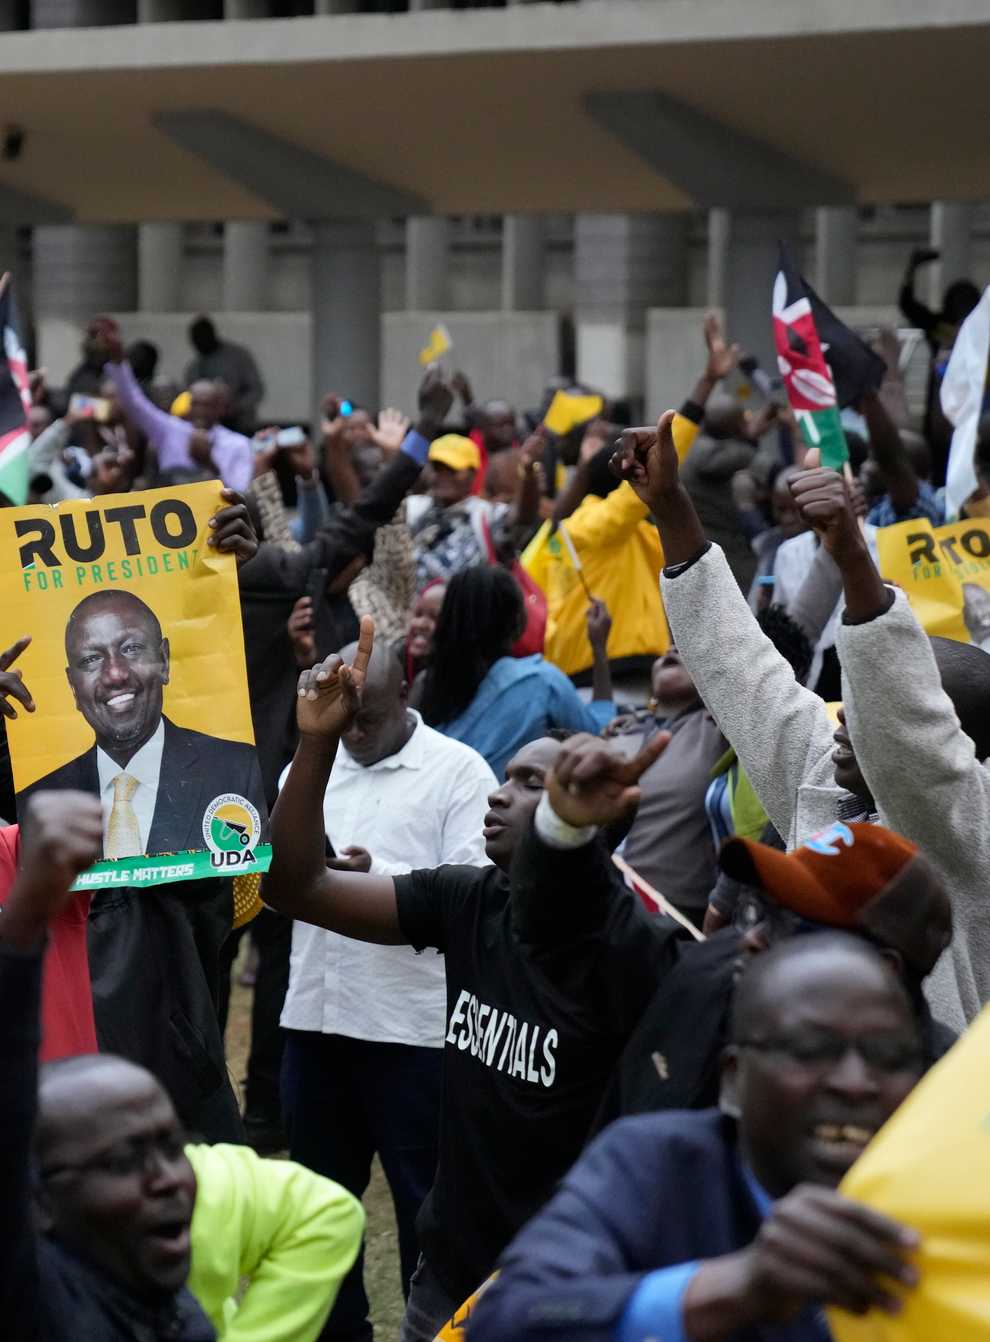 Supporters of Kenyan deputy president William Ruto celebrate (Mosa’ab Elshamy/AP)